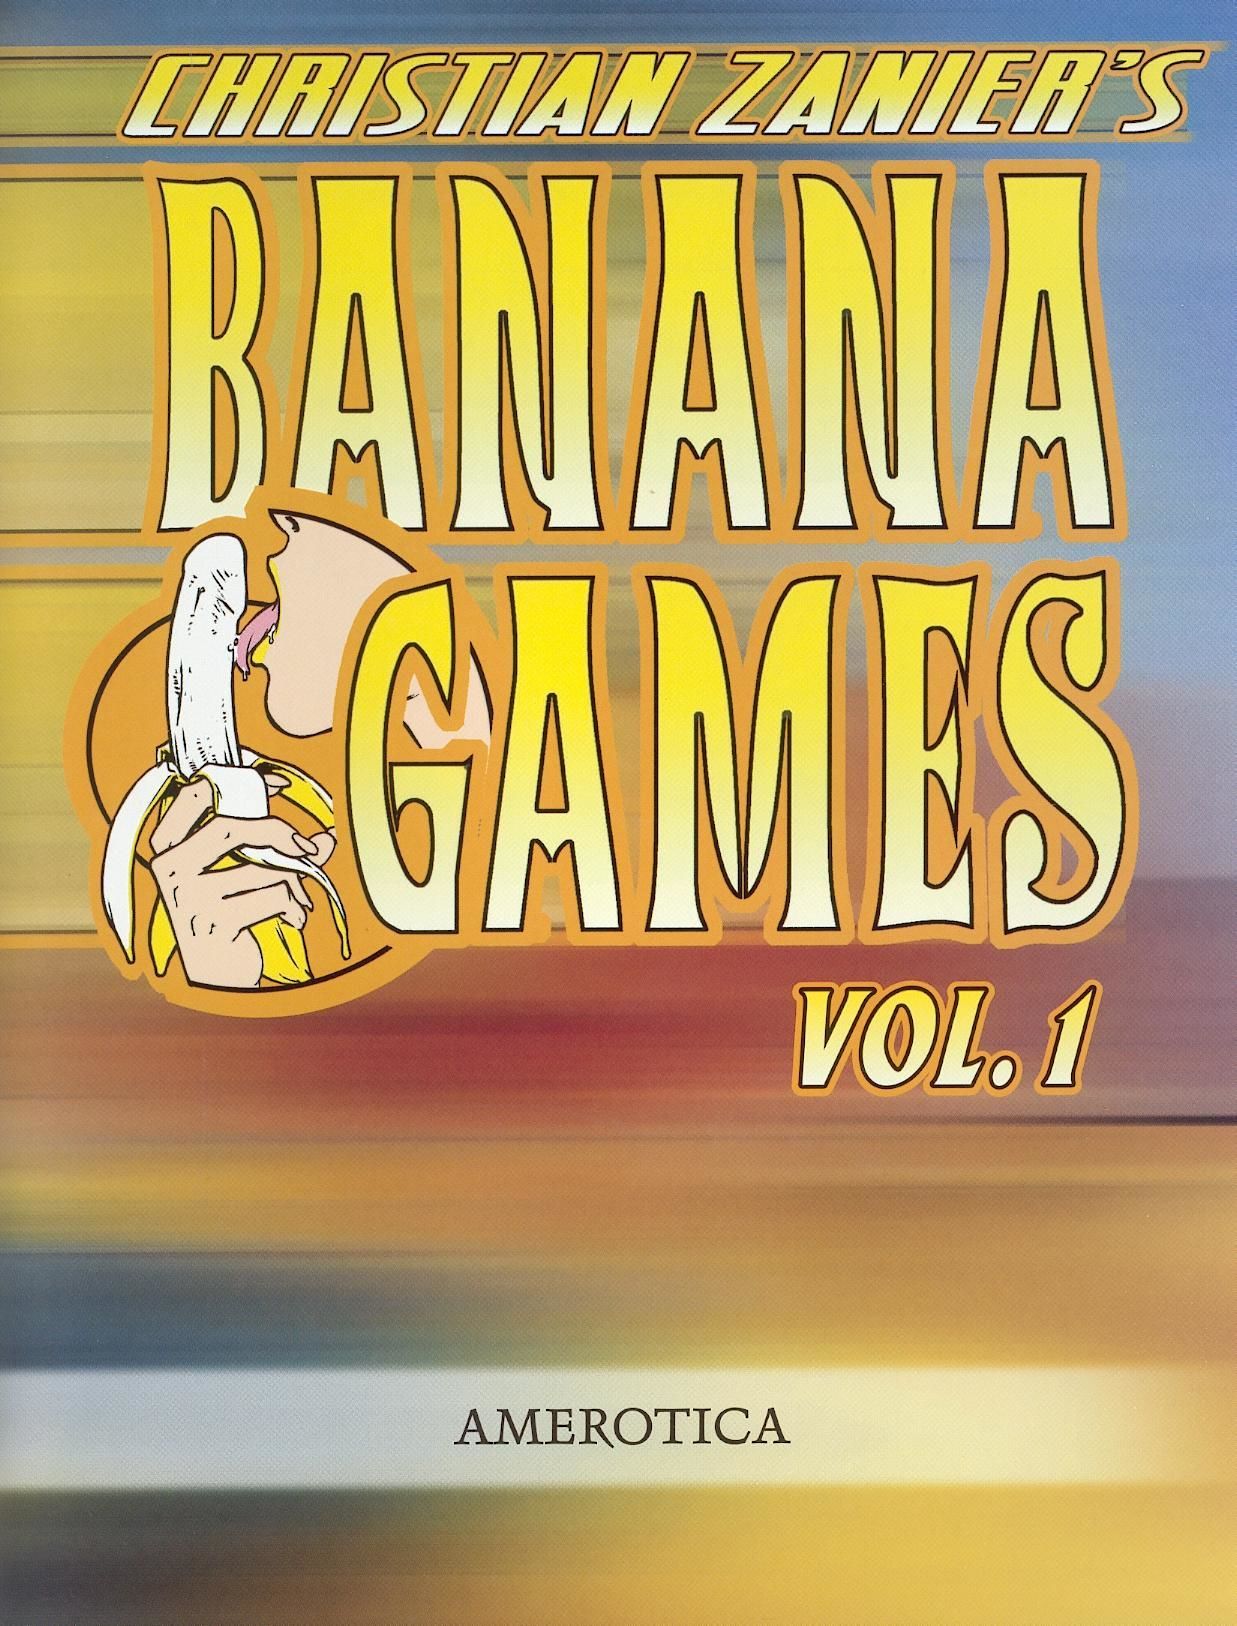 christian zanier Banane Spiele Volumen #1